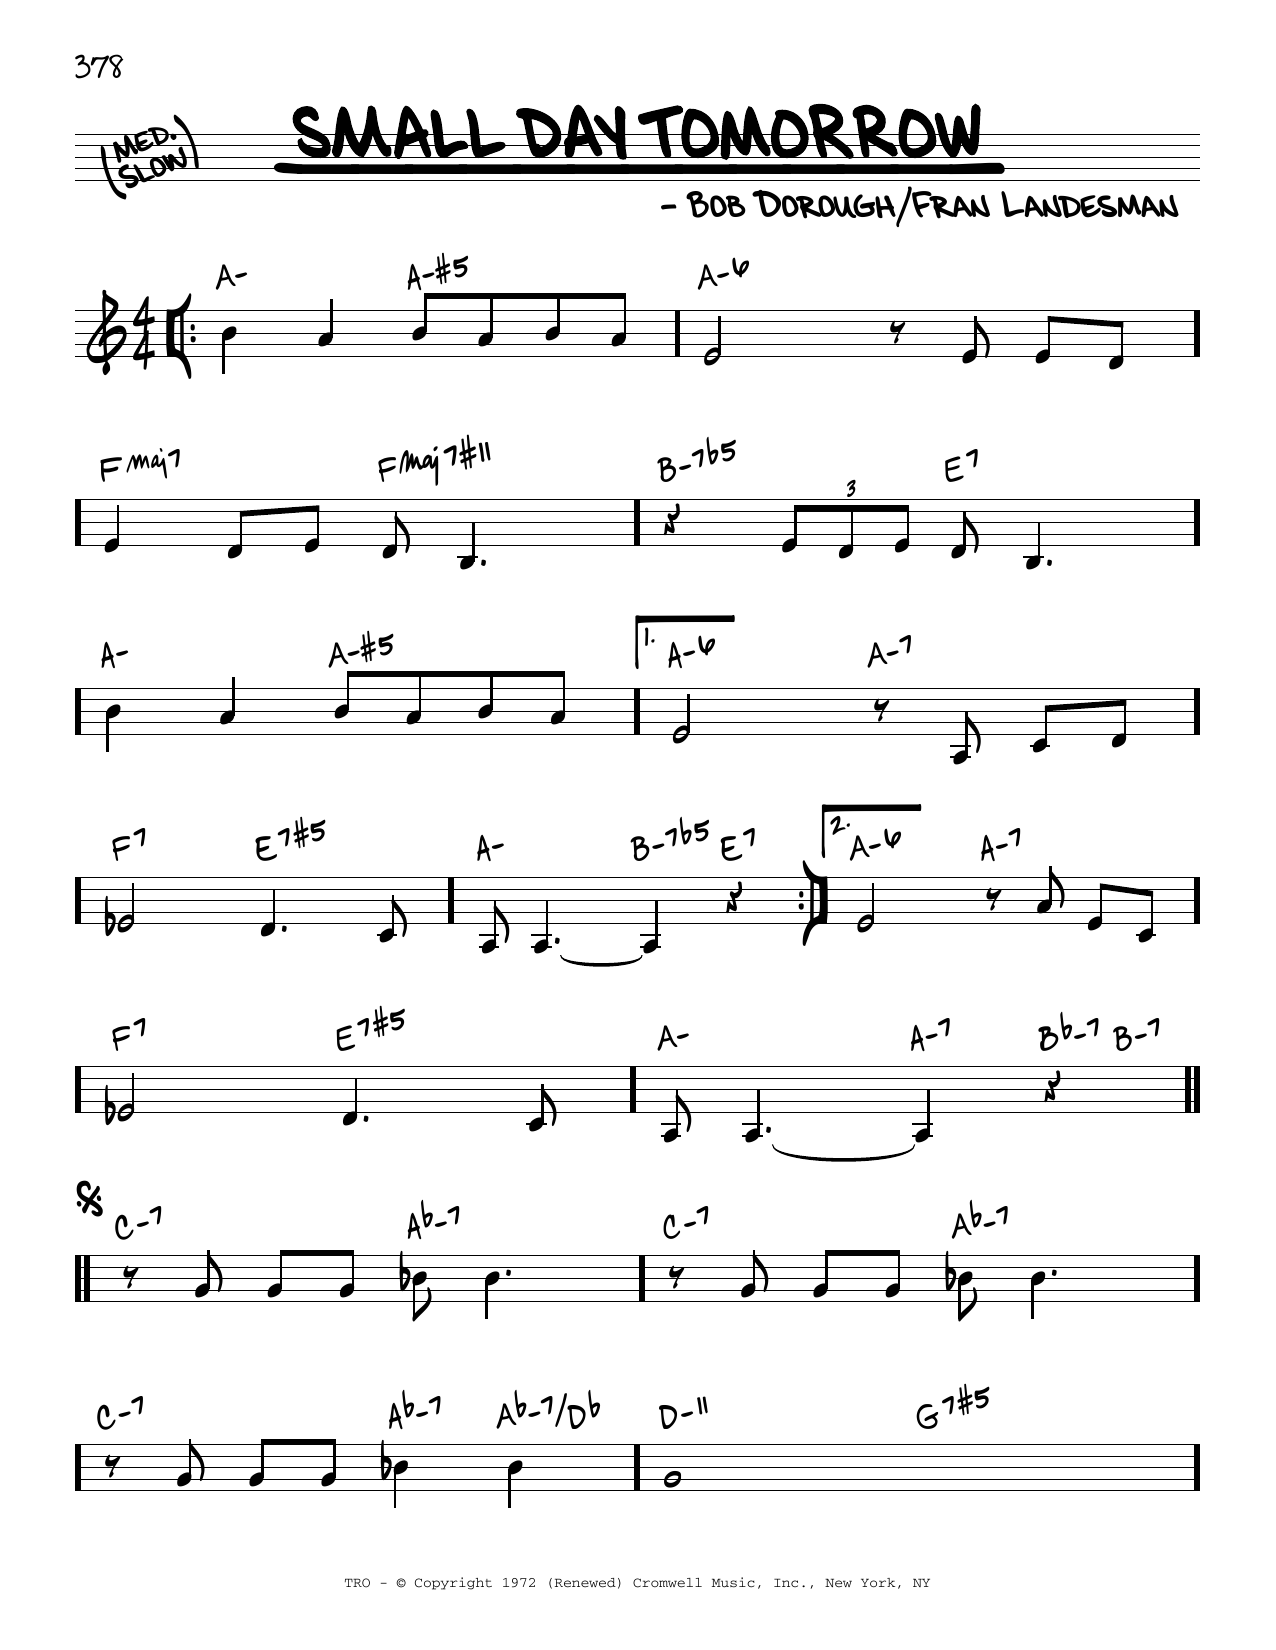 Fran Landesman Small Day Tomorrow Sheet Music Notes & Chords for Real Book – Melody & Chords - Download or Print PDF